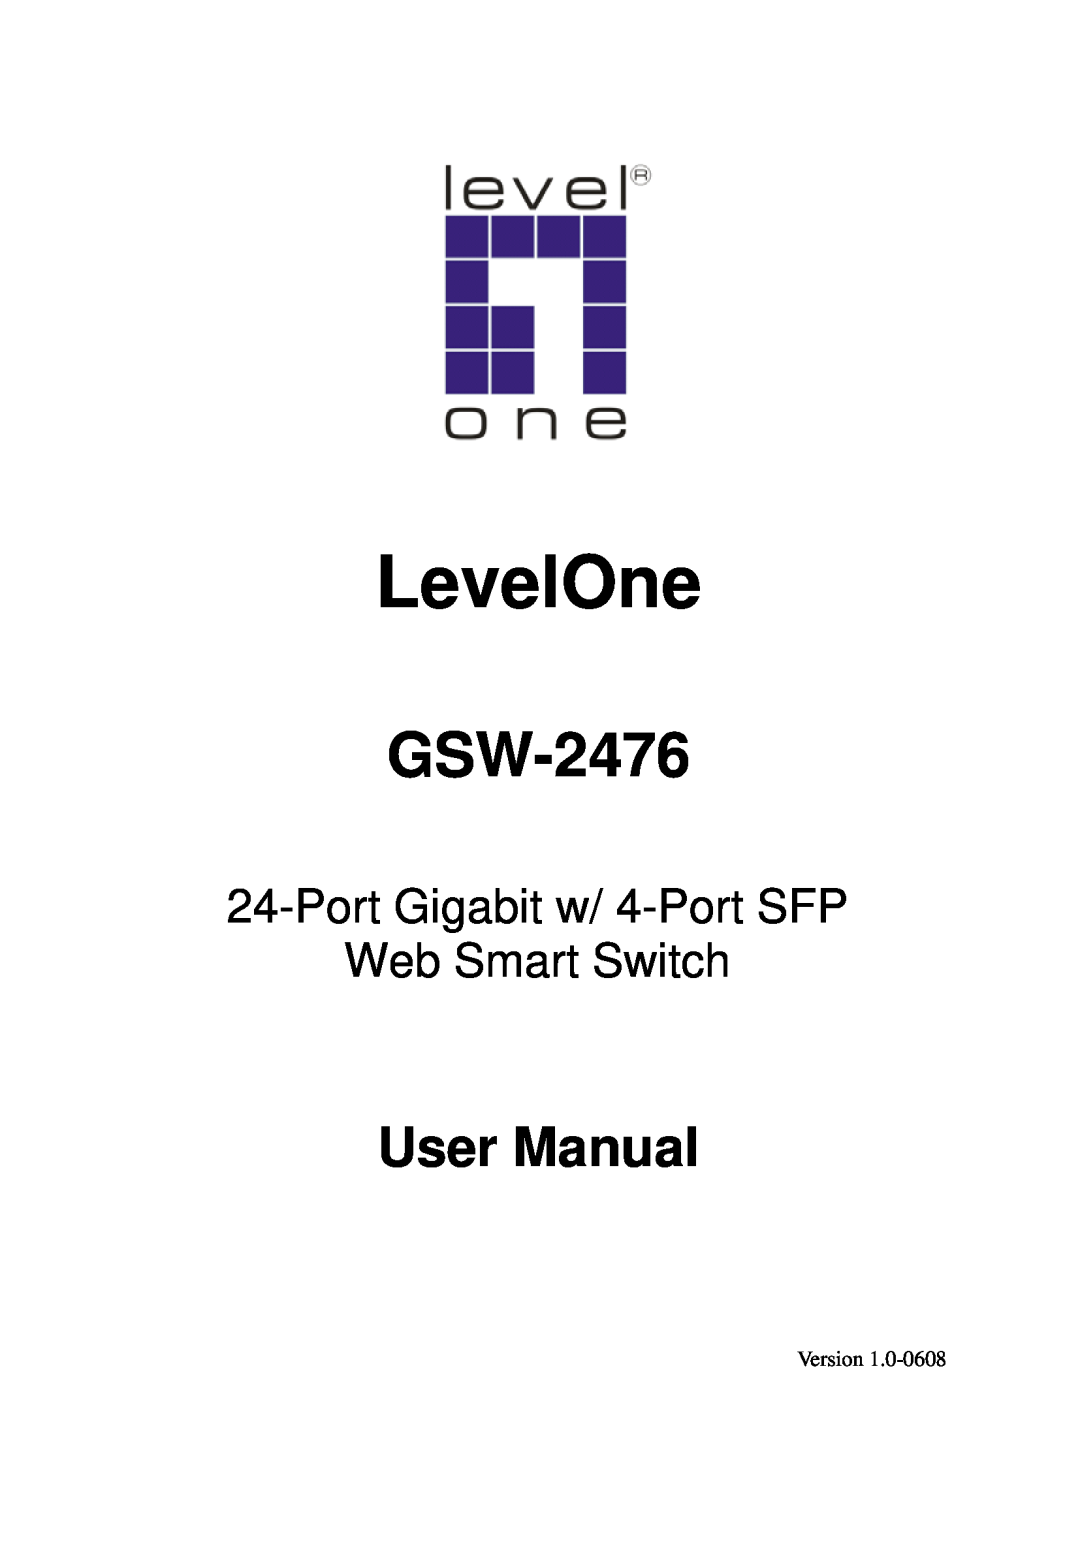 LevelOne GSW-2476 user manual LevelOne, User Manual, Port Gigabit w/ 4-Port SFP Web Smart Switch, Version 